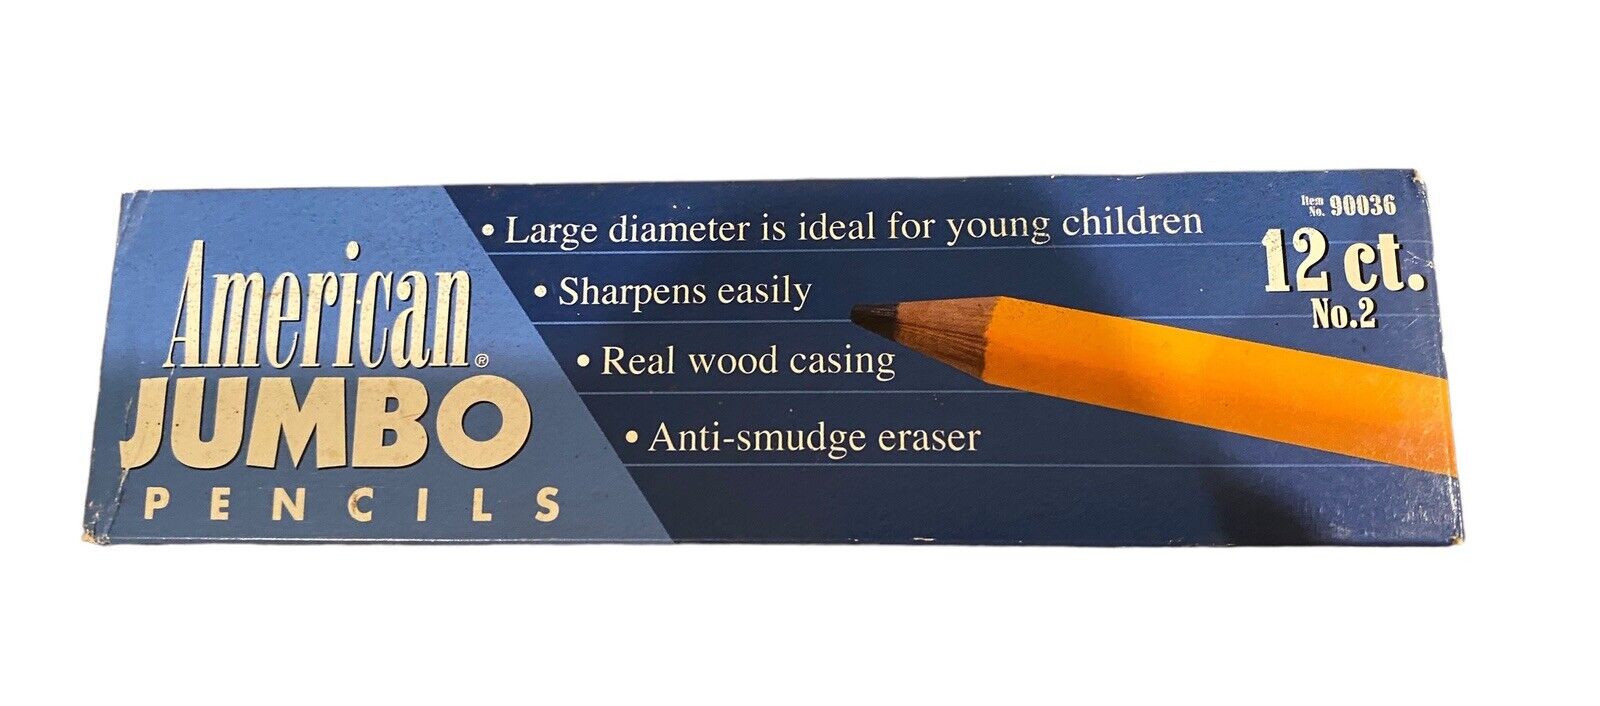 American Jumbo Pencils No 2 by Sanford Large Diameter Real Wood Casing 2001